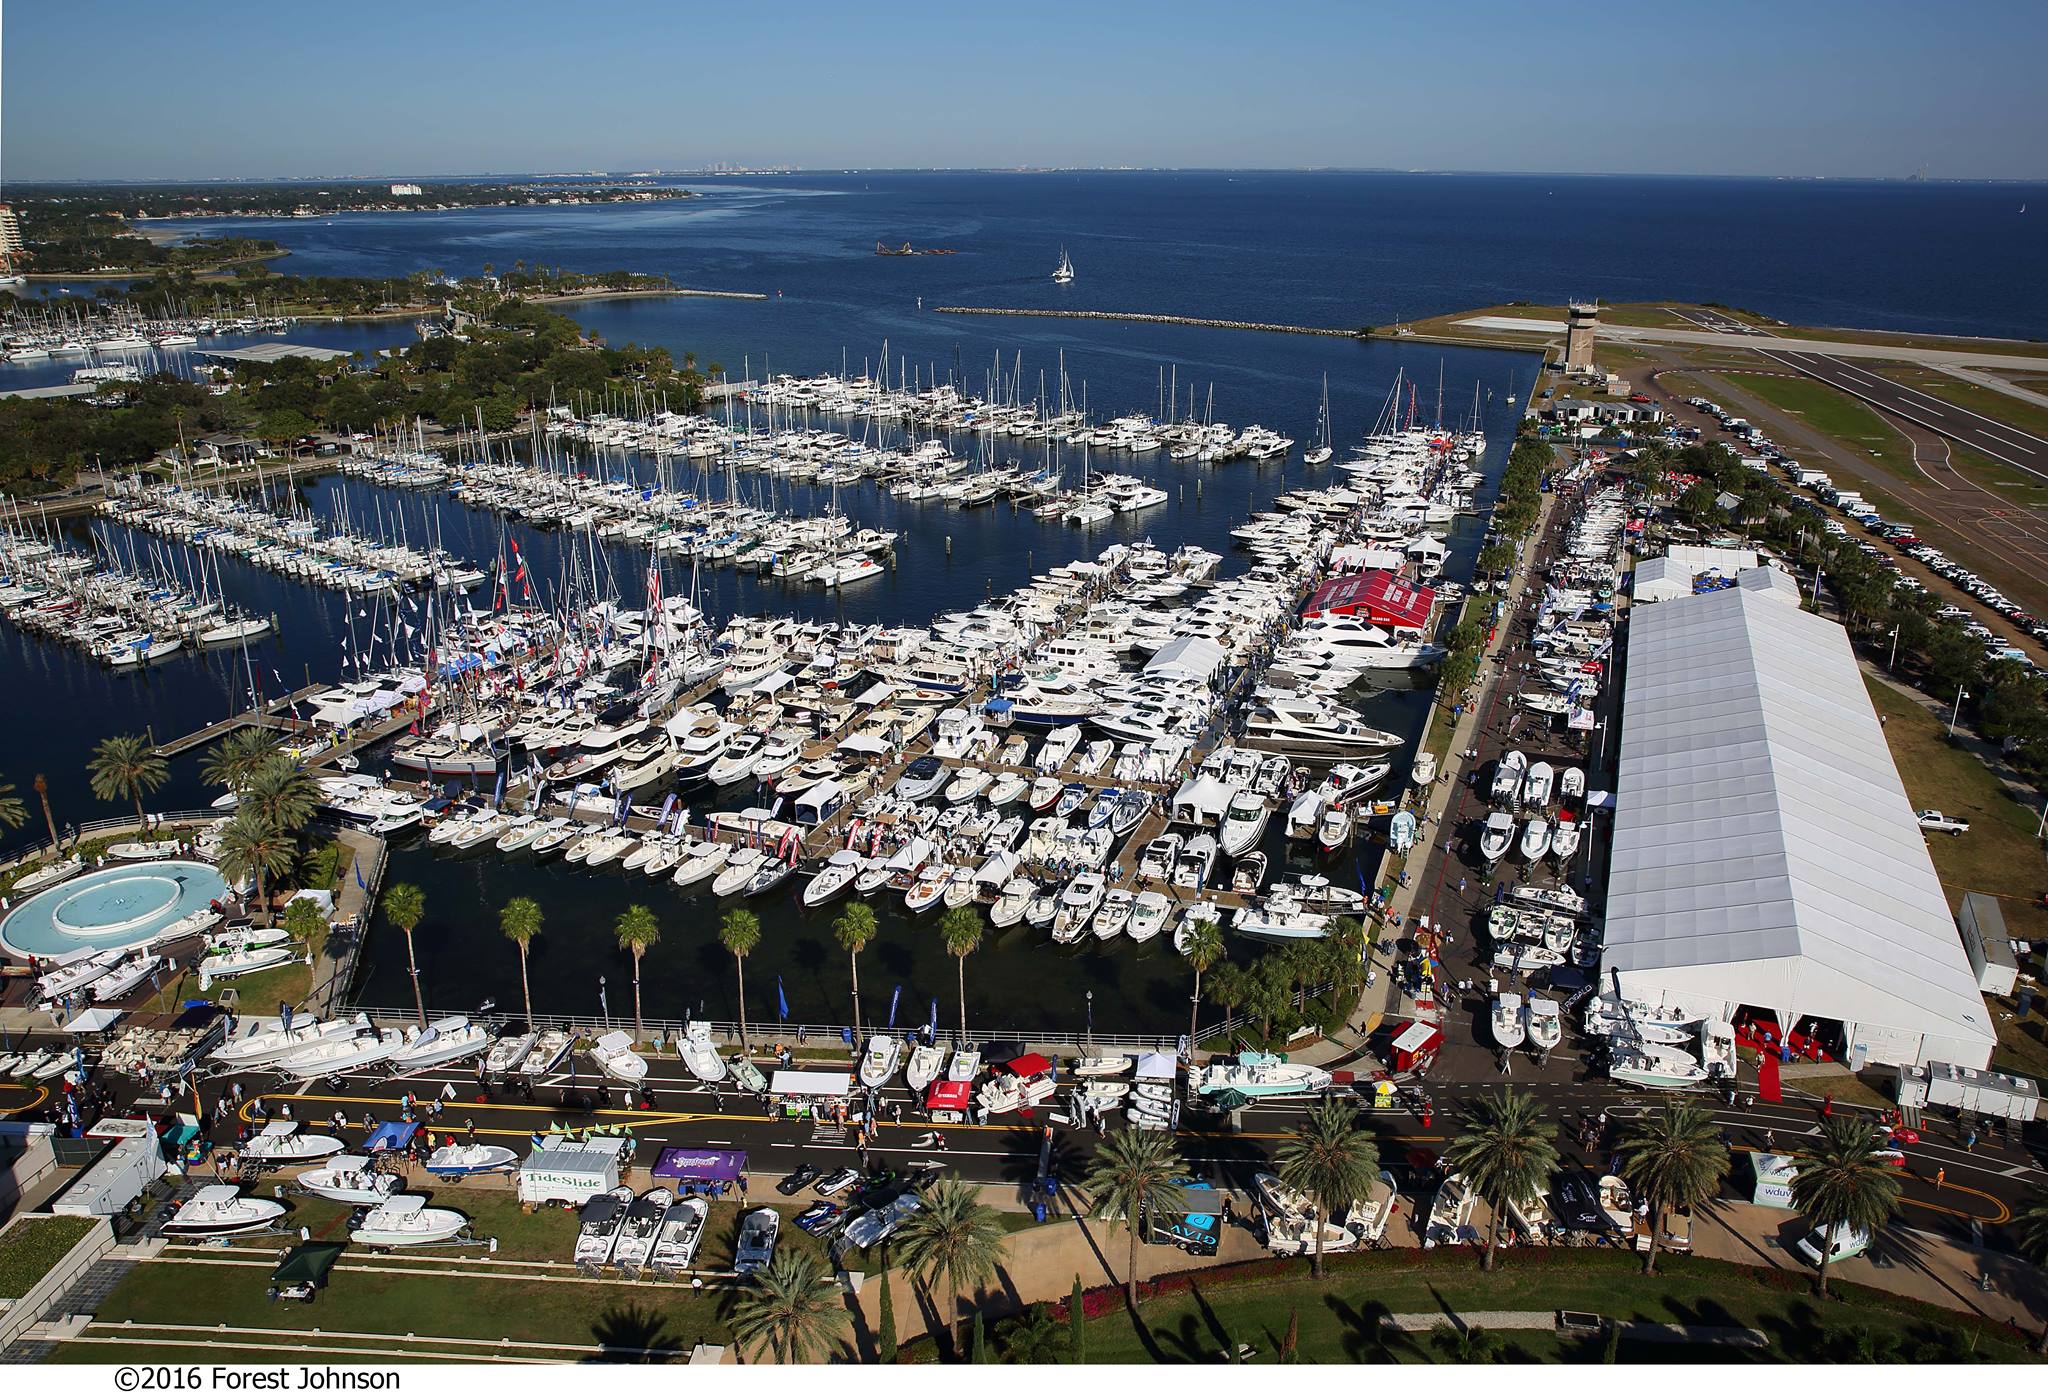 St. Petersburg, Florida Boat Show 2017 - Whiteaker Yacht Sales